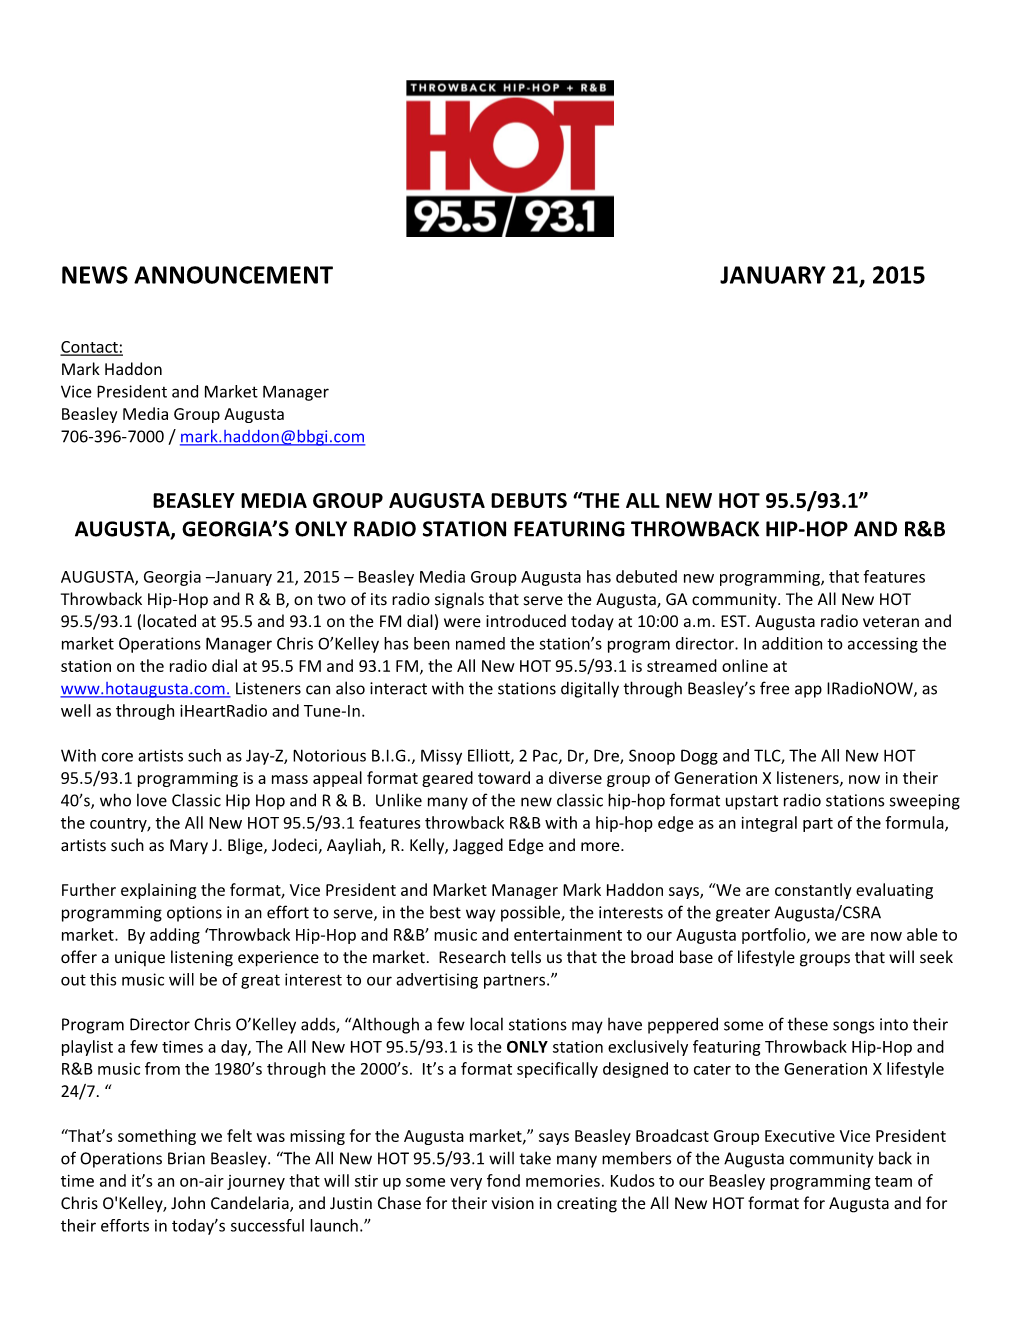 News Announcement January 21, 2015